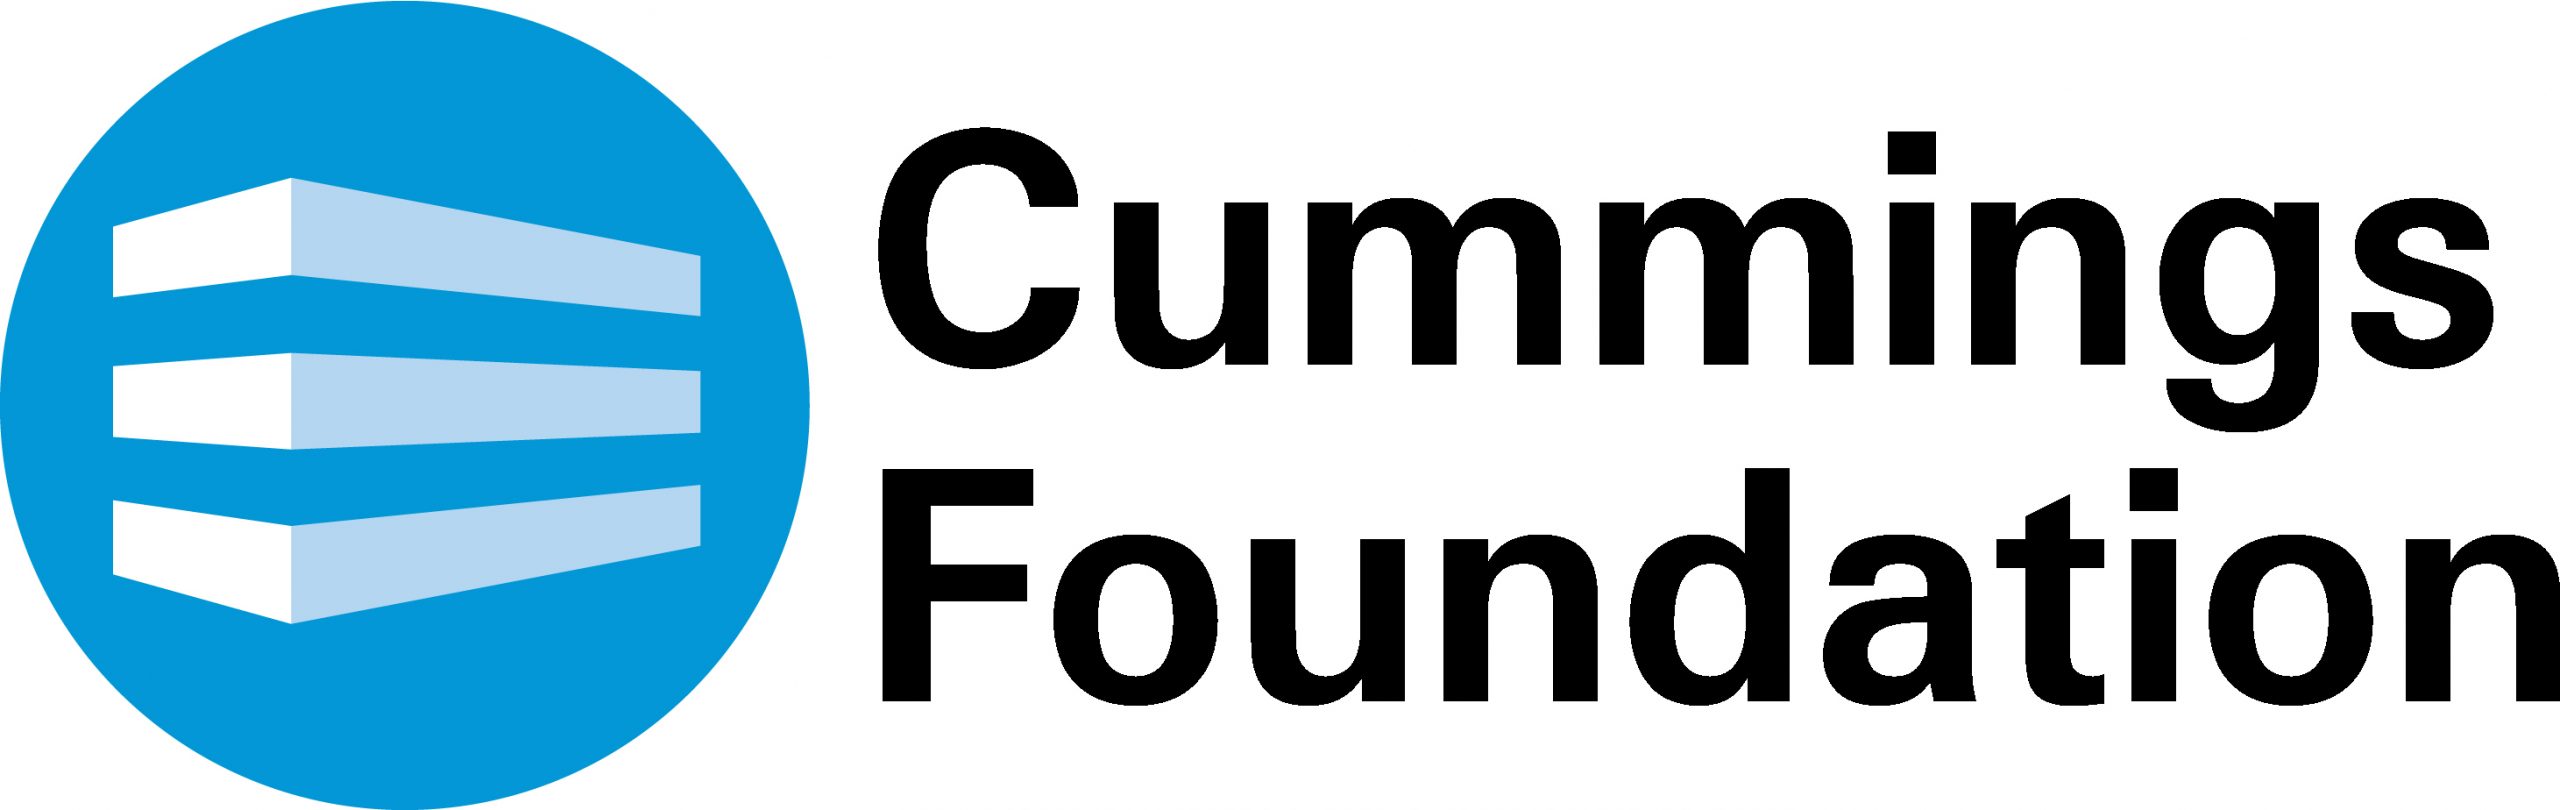 Cummings_Foundation_logo-scaled